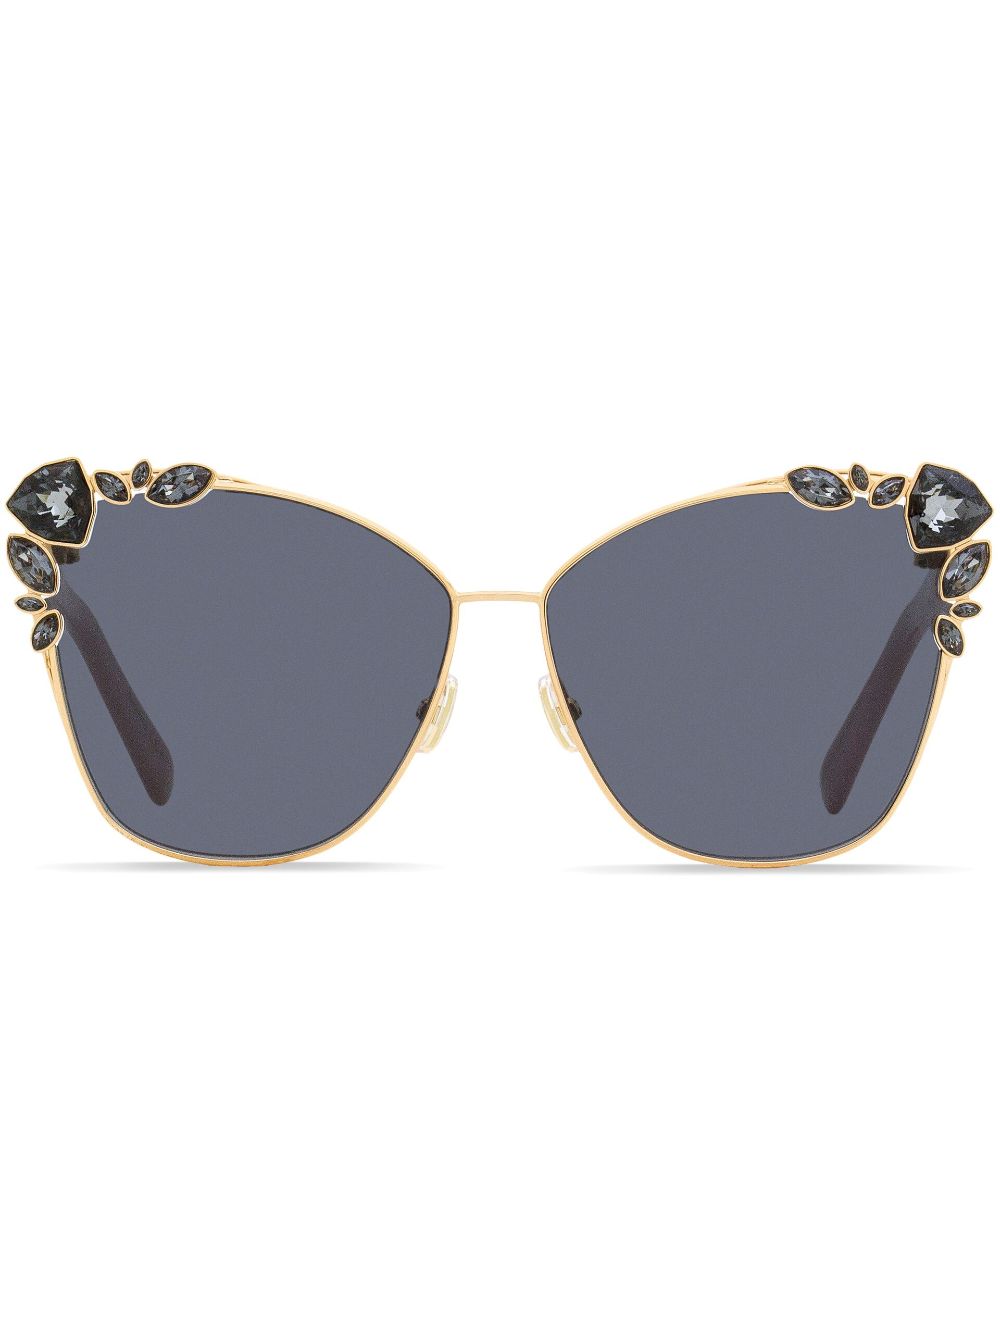 Jimmy Choo Eyewear Kyla 25th Anniversary sunglasses - Gold von Jimmy Choo Eyewear